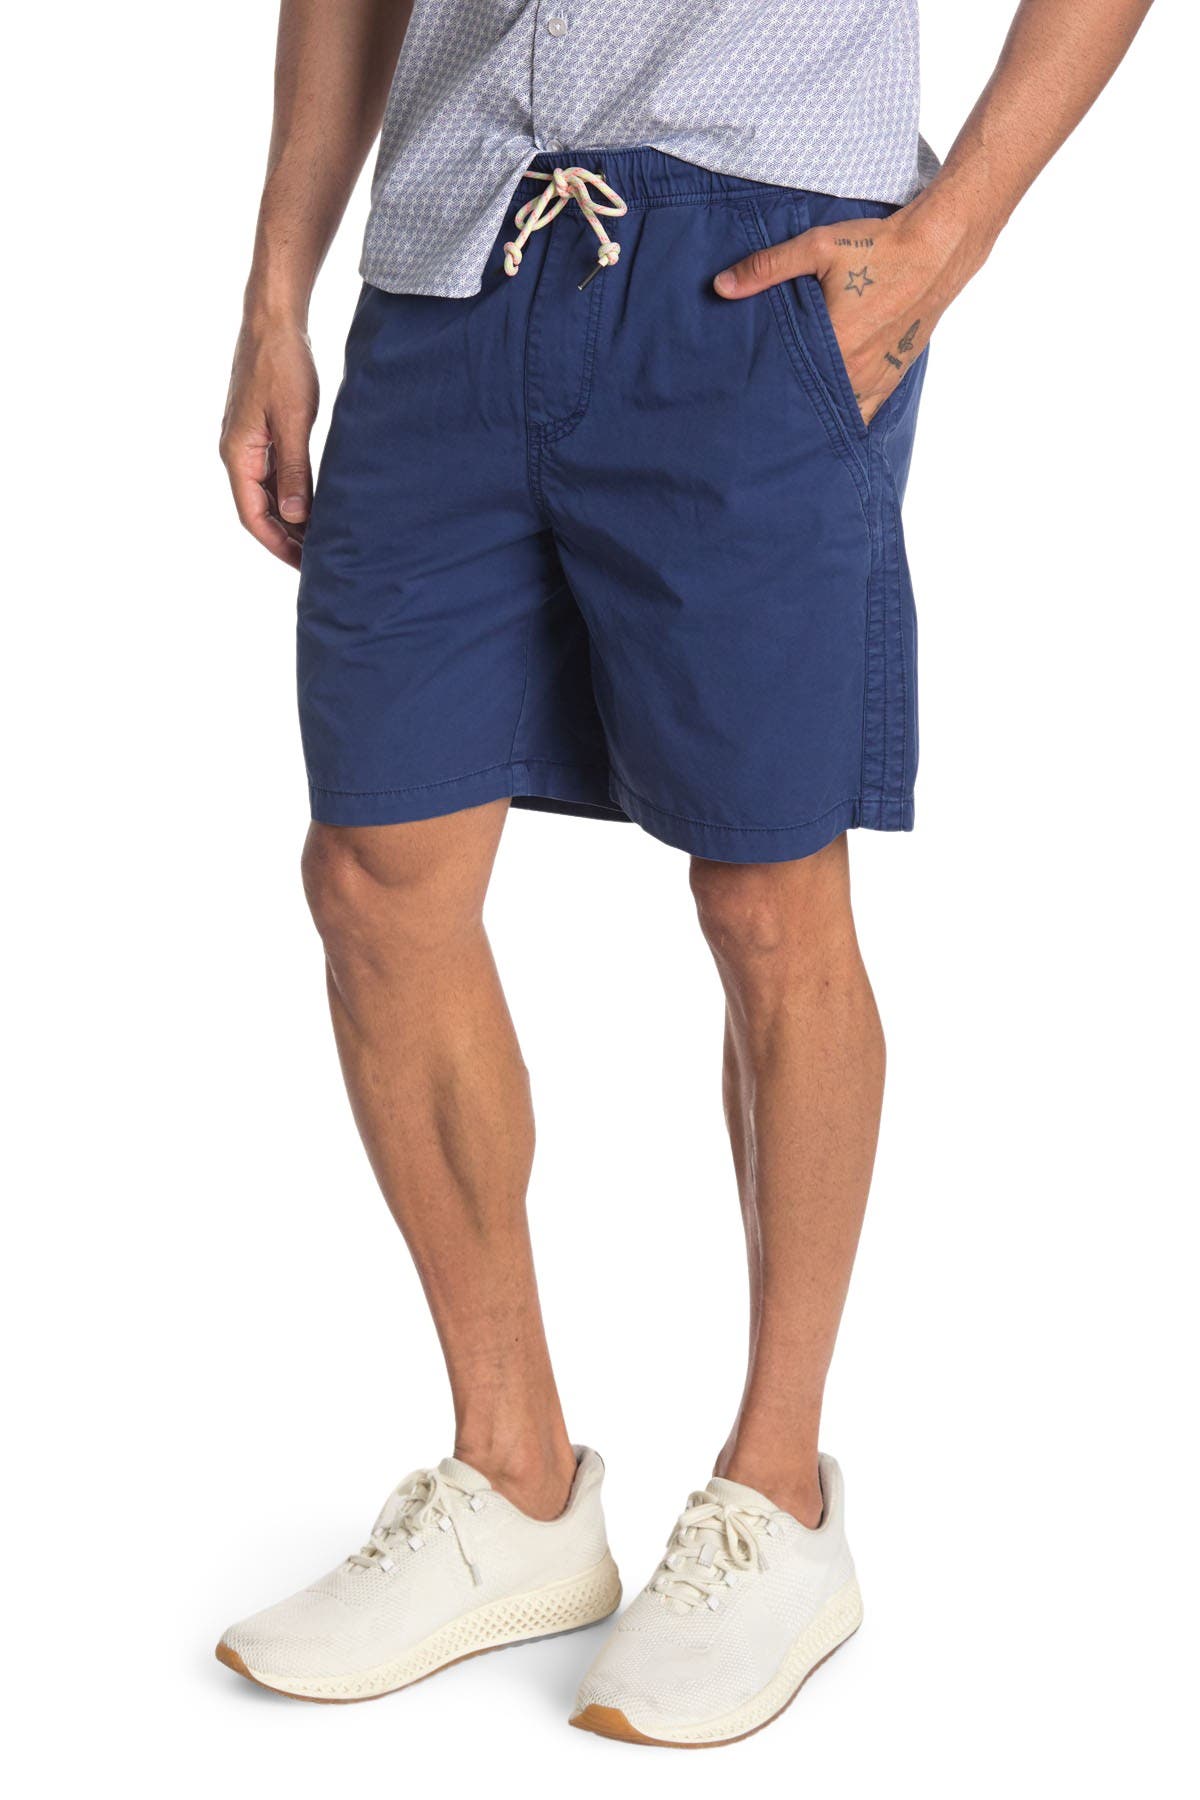 Union Denim Sun-sational Pull-on Woven Shorts In Dark Blue3